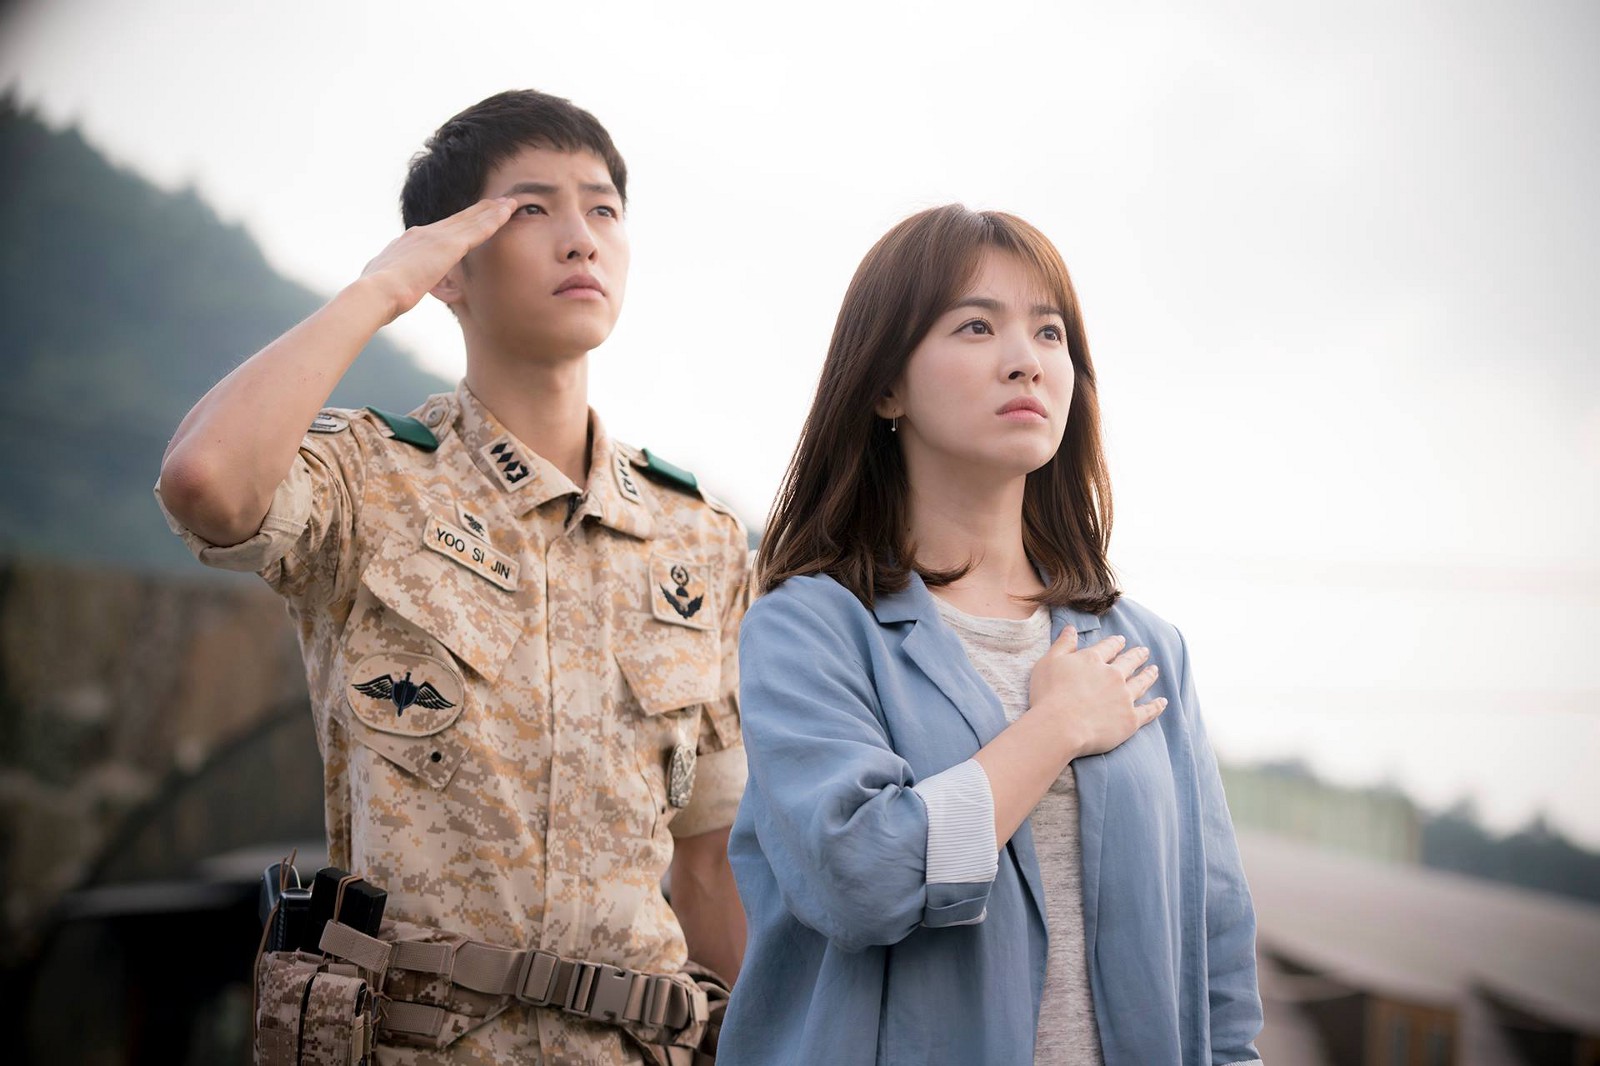 Song Joong Ki and Song Hye Kyo in “Descendants of the Sun” (2016).